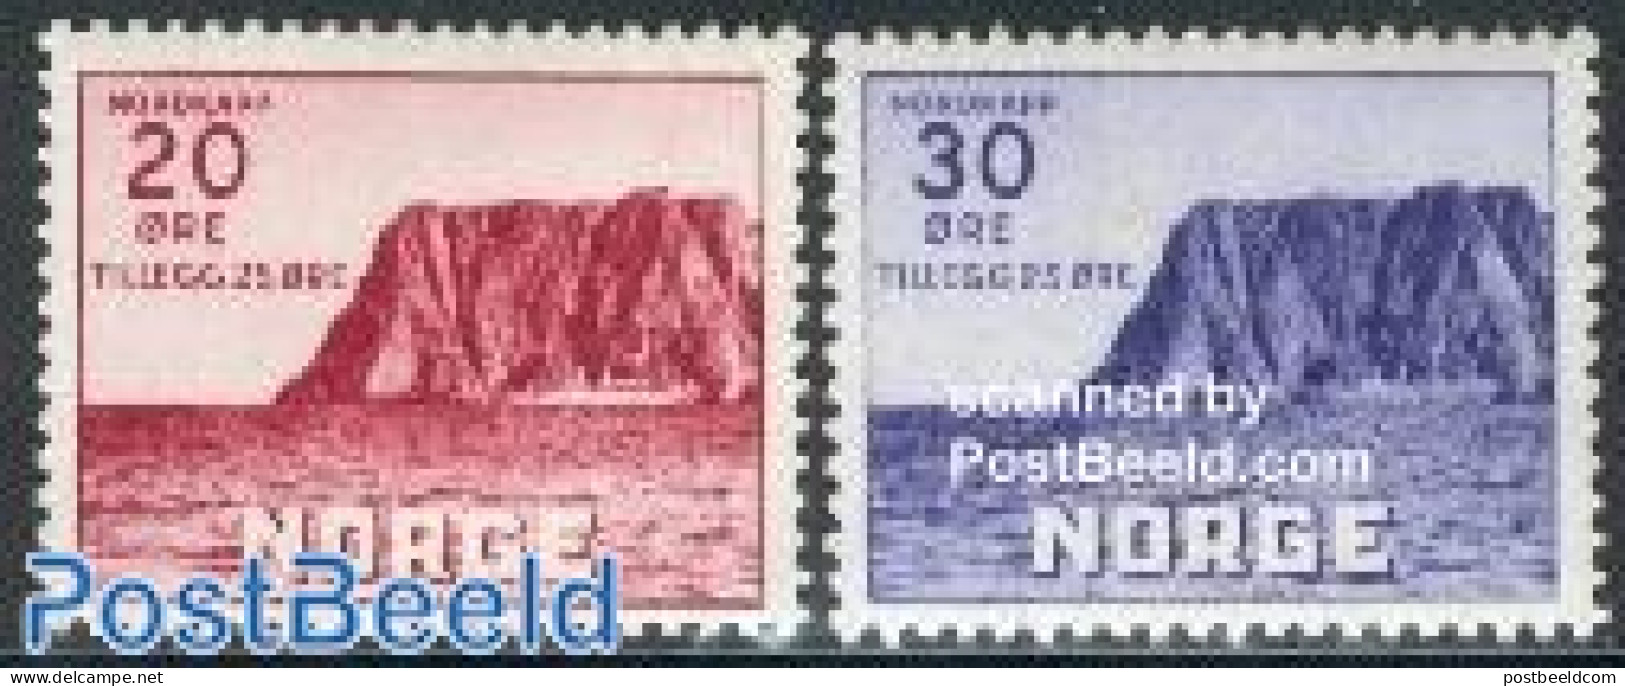 Norway 1938 Tourism 2v, Mint NH, Various - Tourism - Ungebraucht